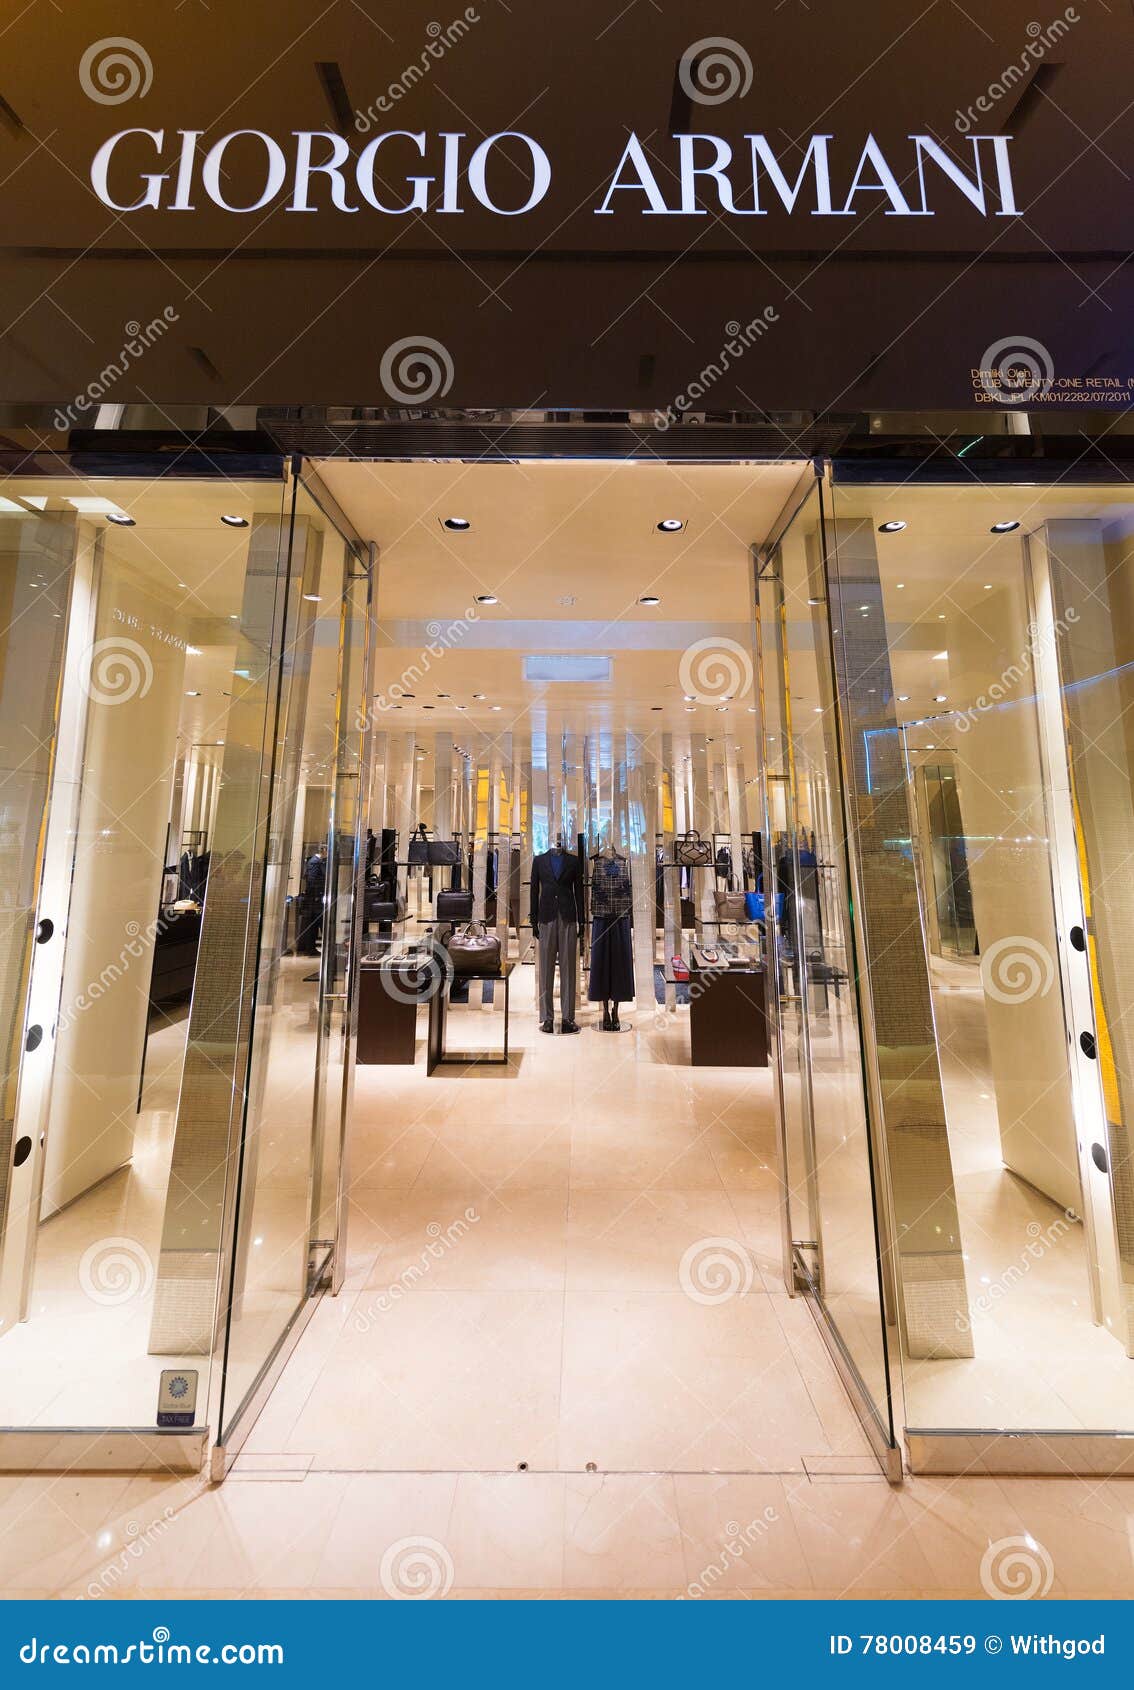 Giorgio Armani Store in Kuala Lumpur Editorial Stock Image - Image of ...